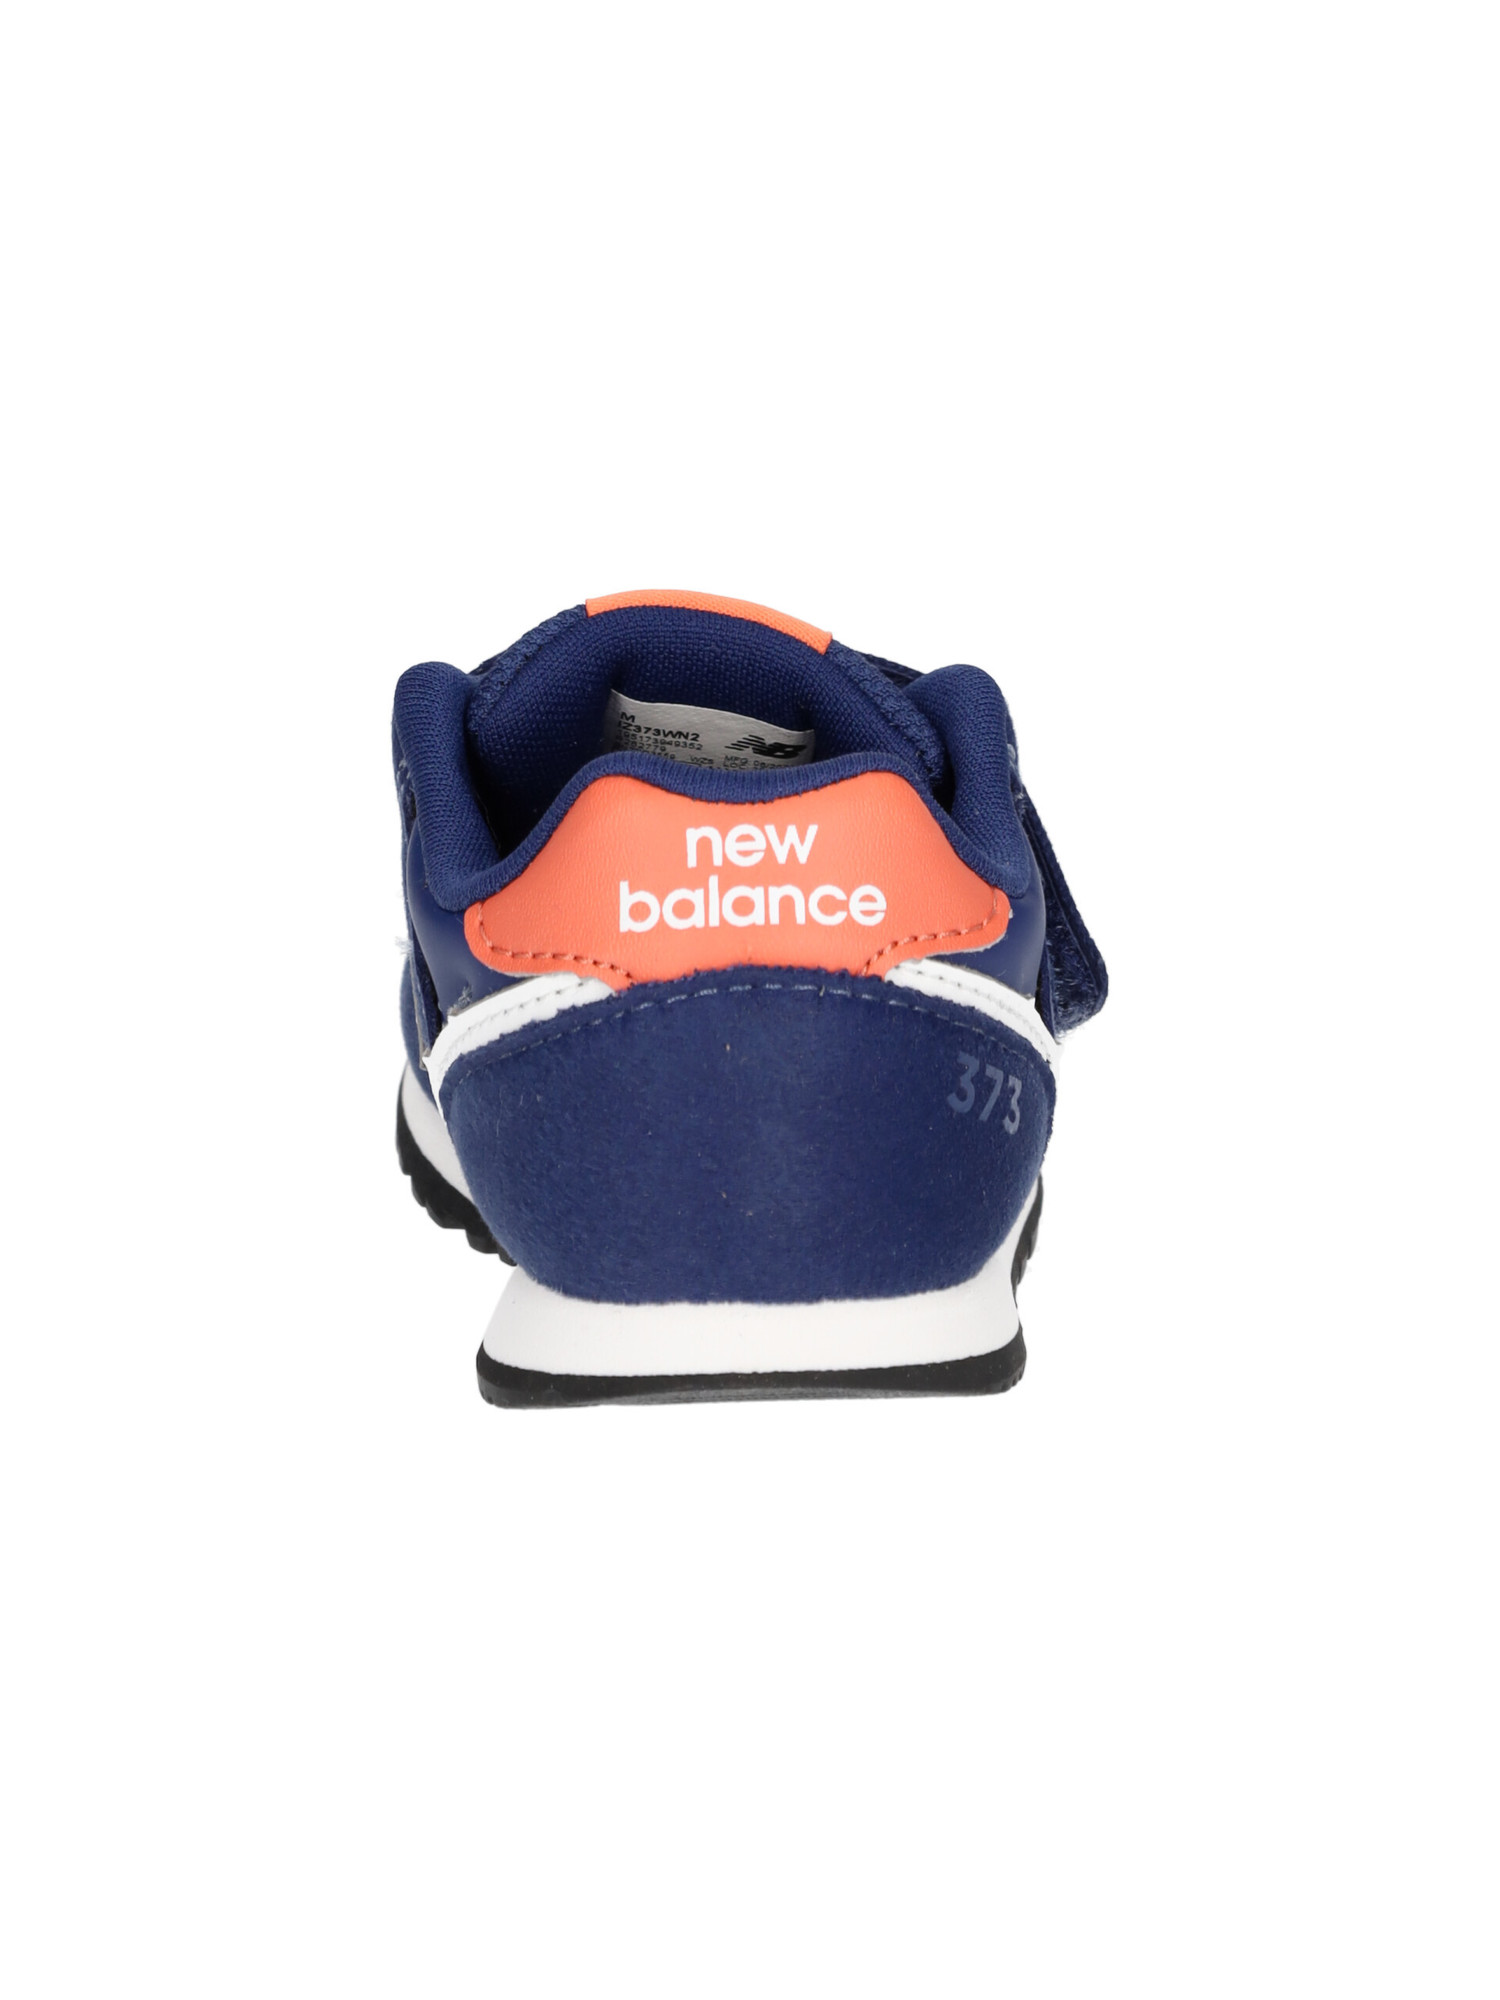 Sneaker New Balance primi passi bambino blu هوامير